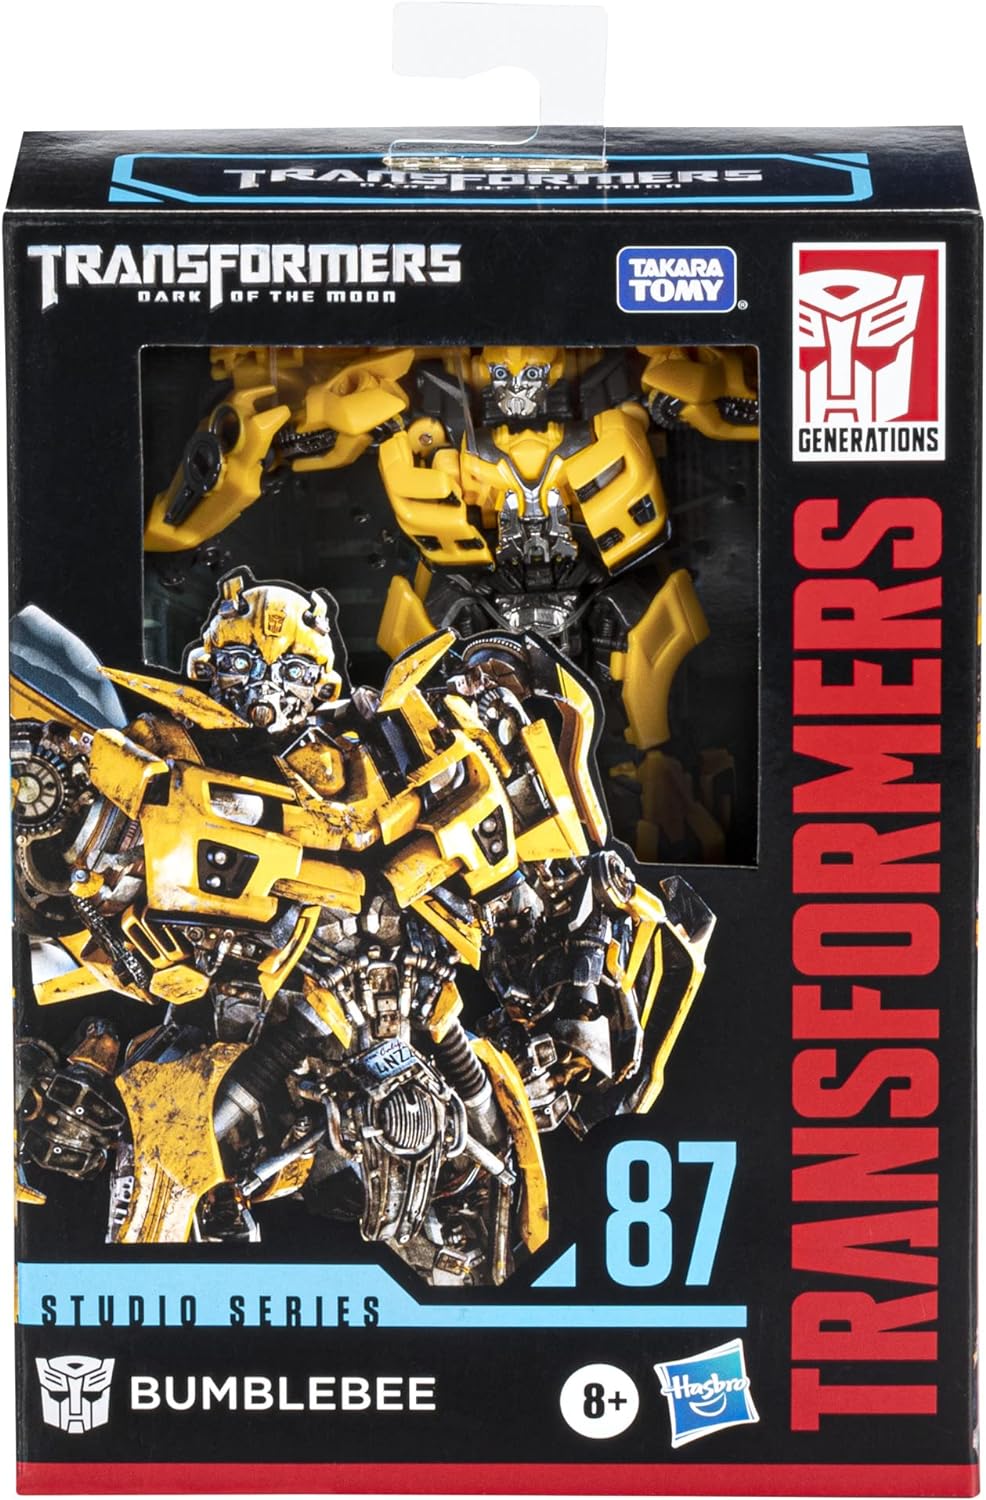 Transformers Toys Studio Series 87 Deluxe Bumblebee